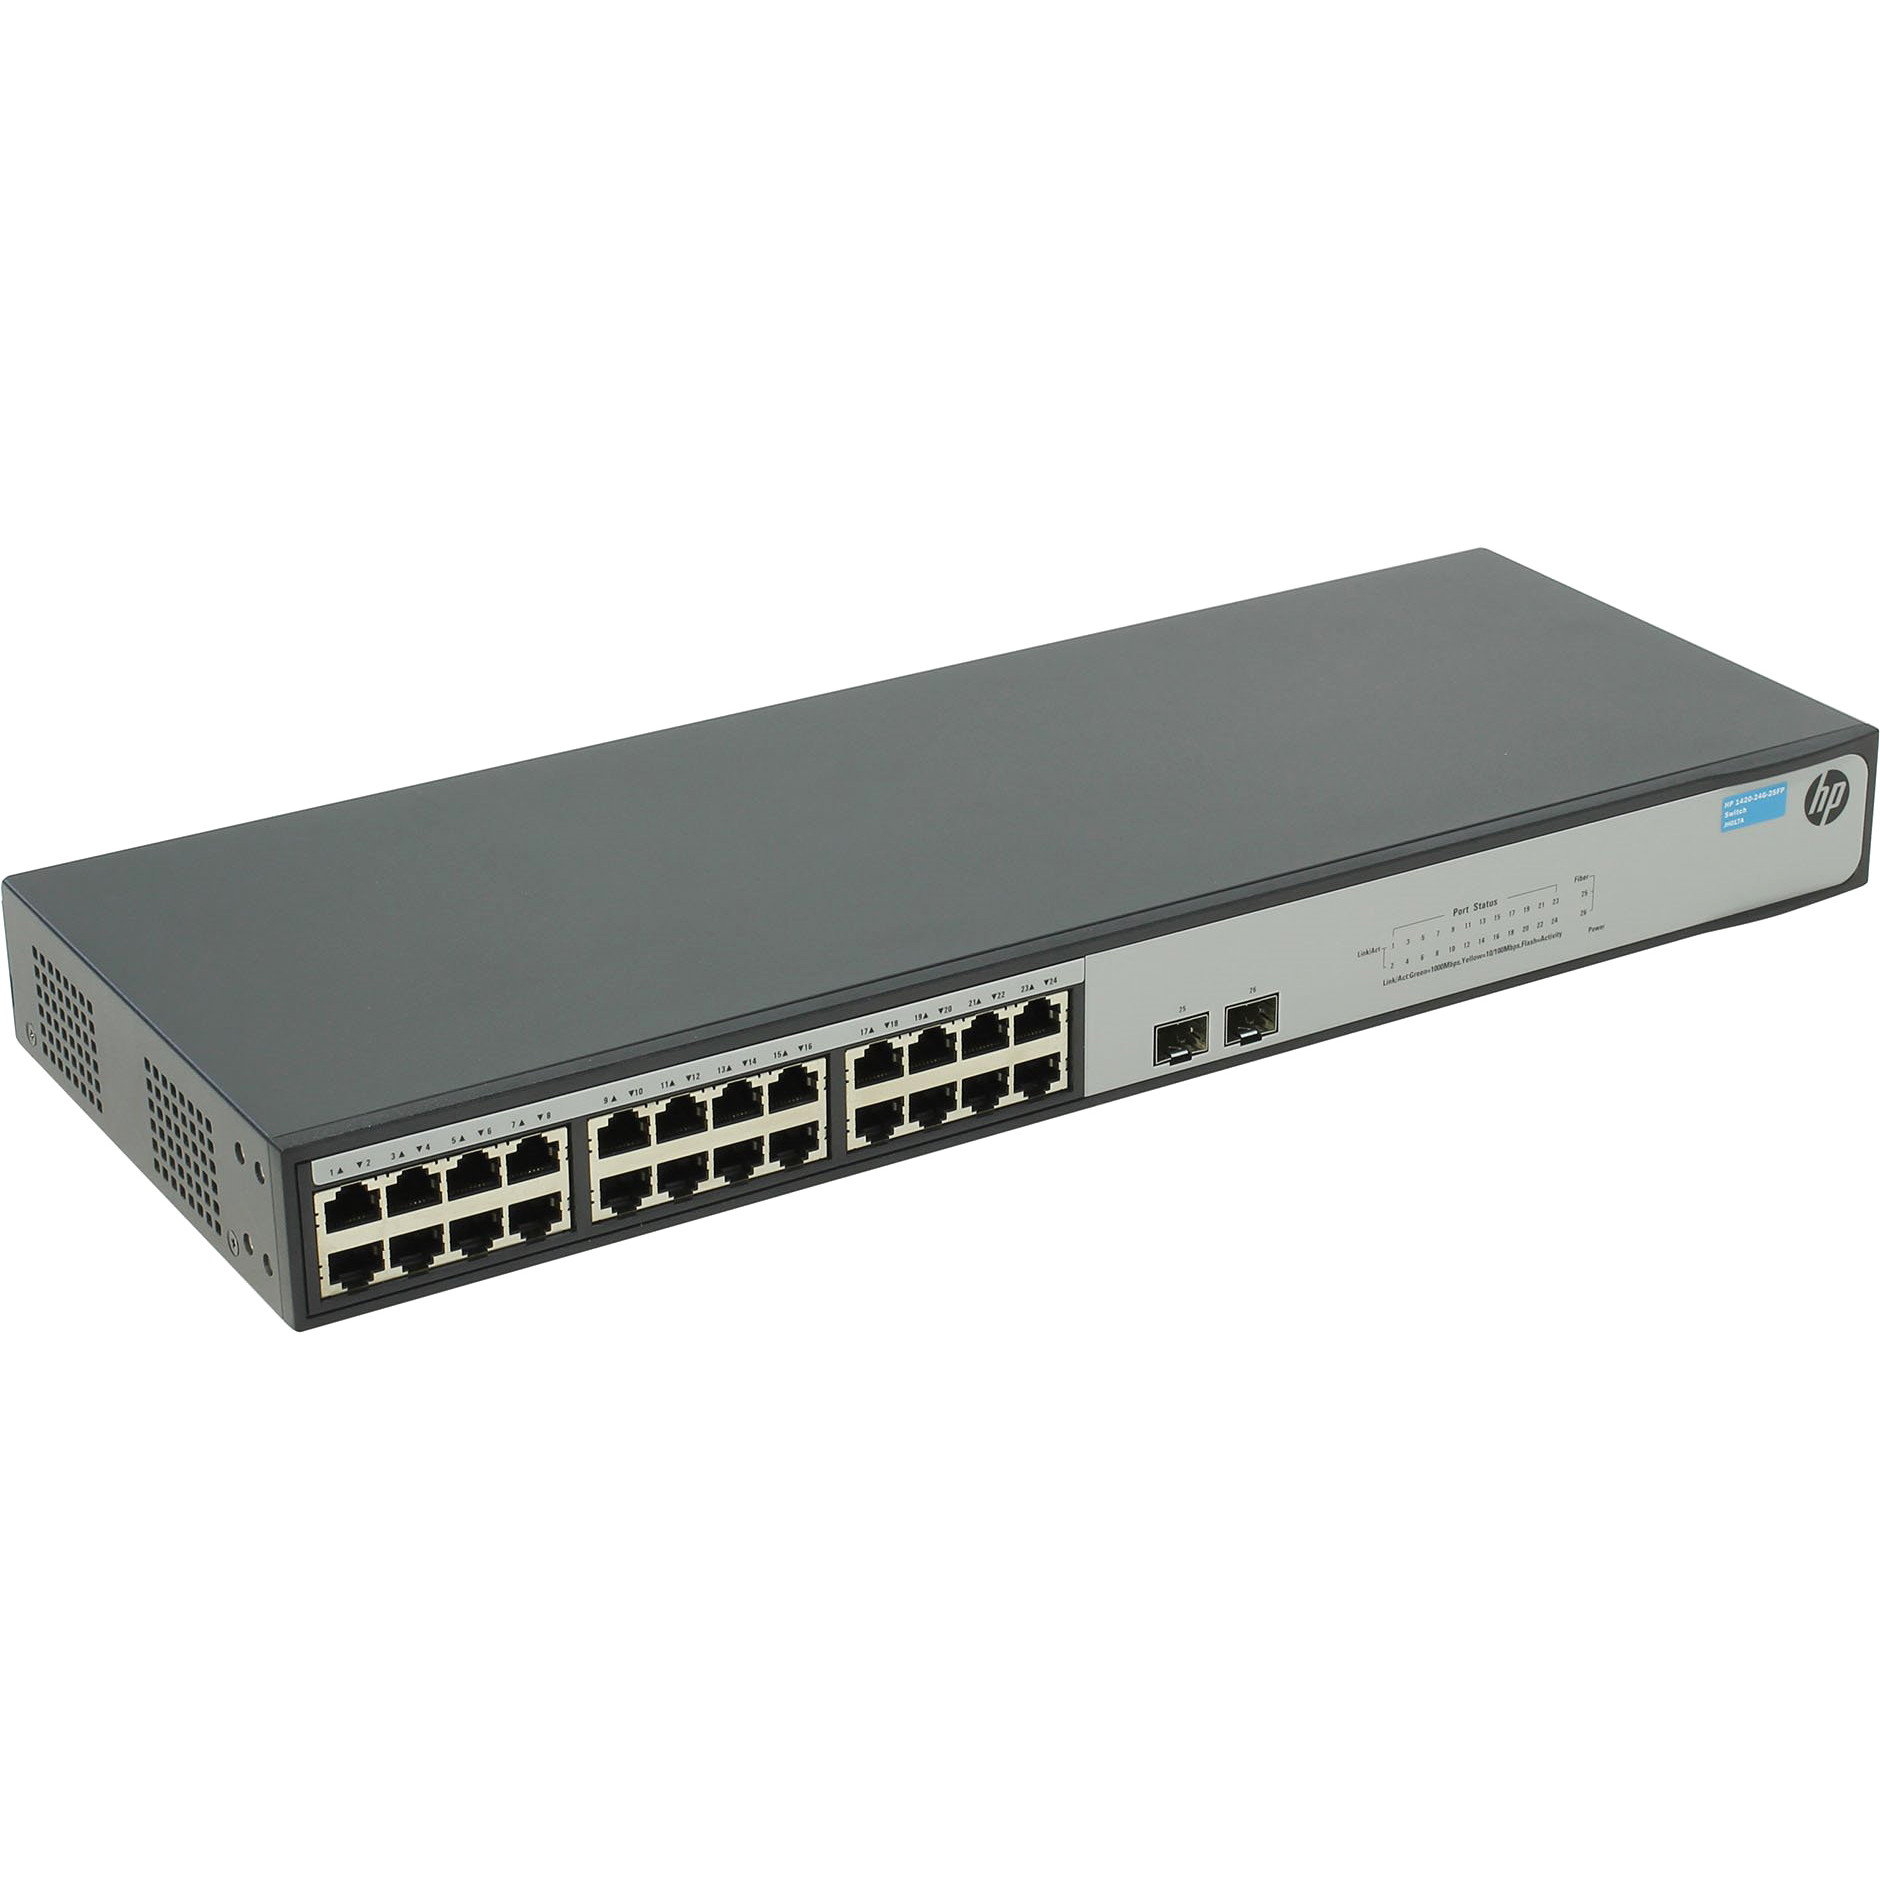  Switch HP 1420-24 